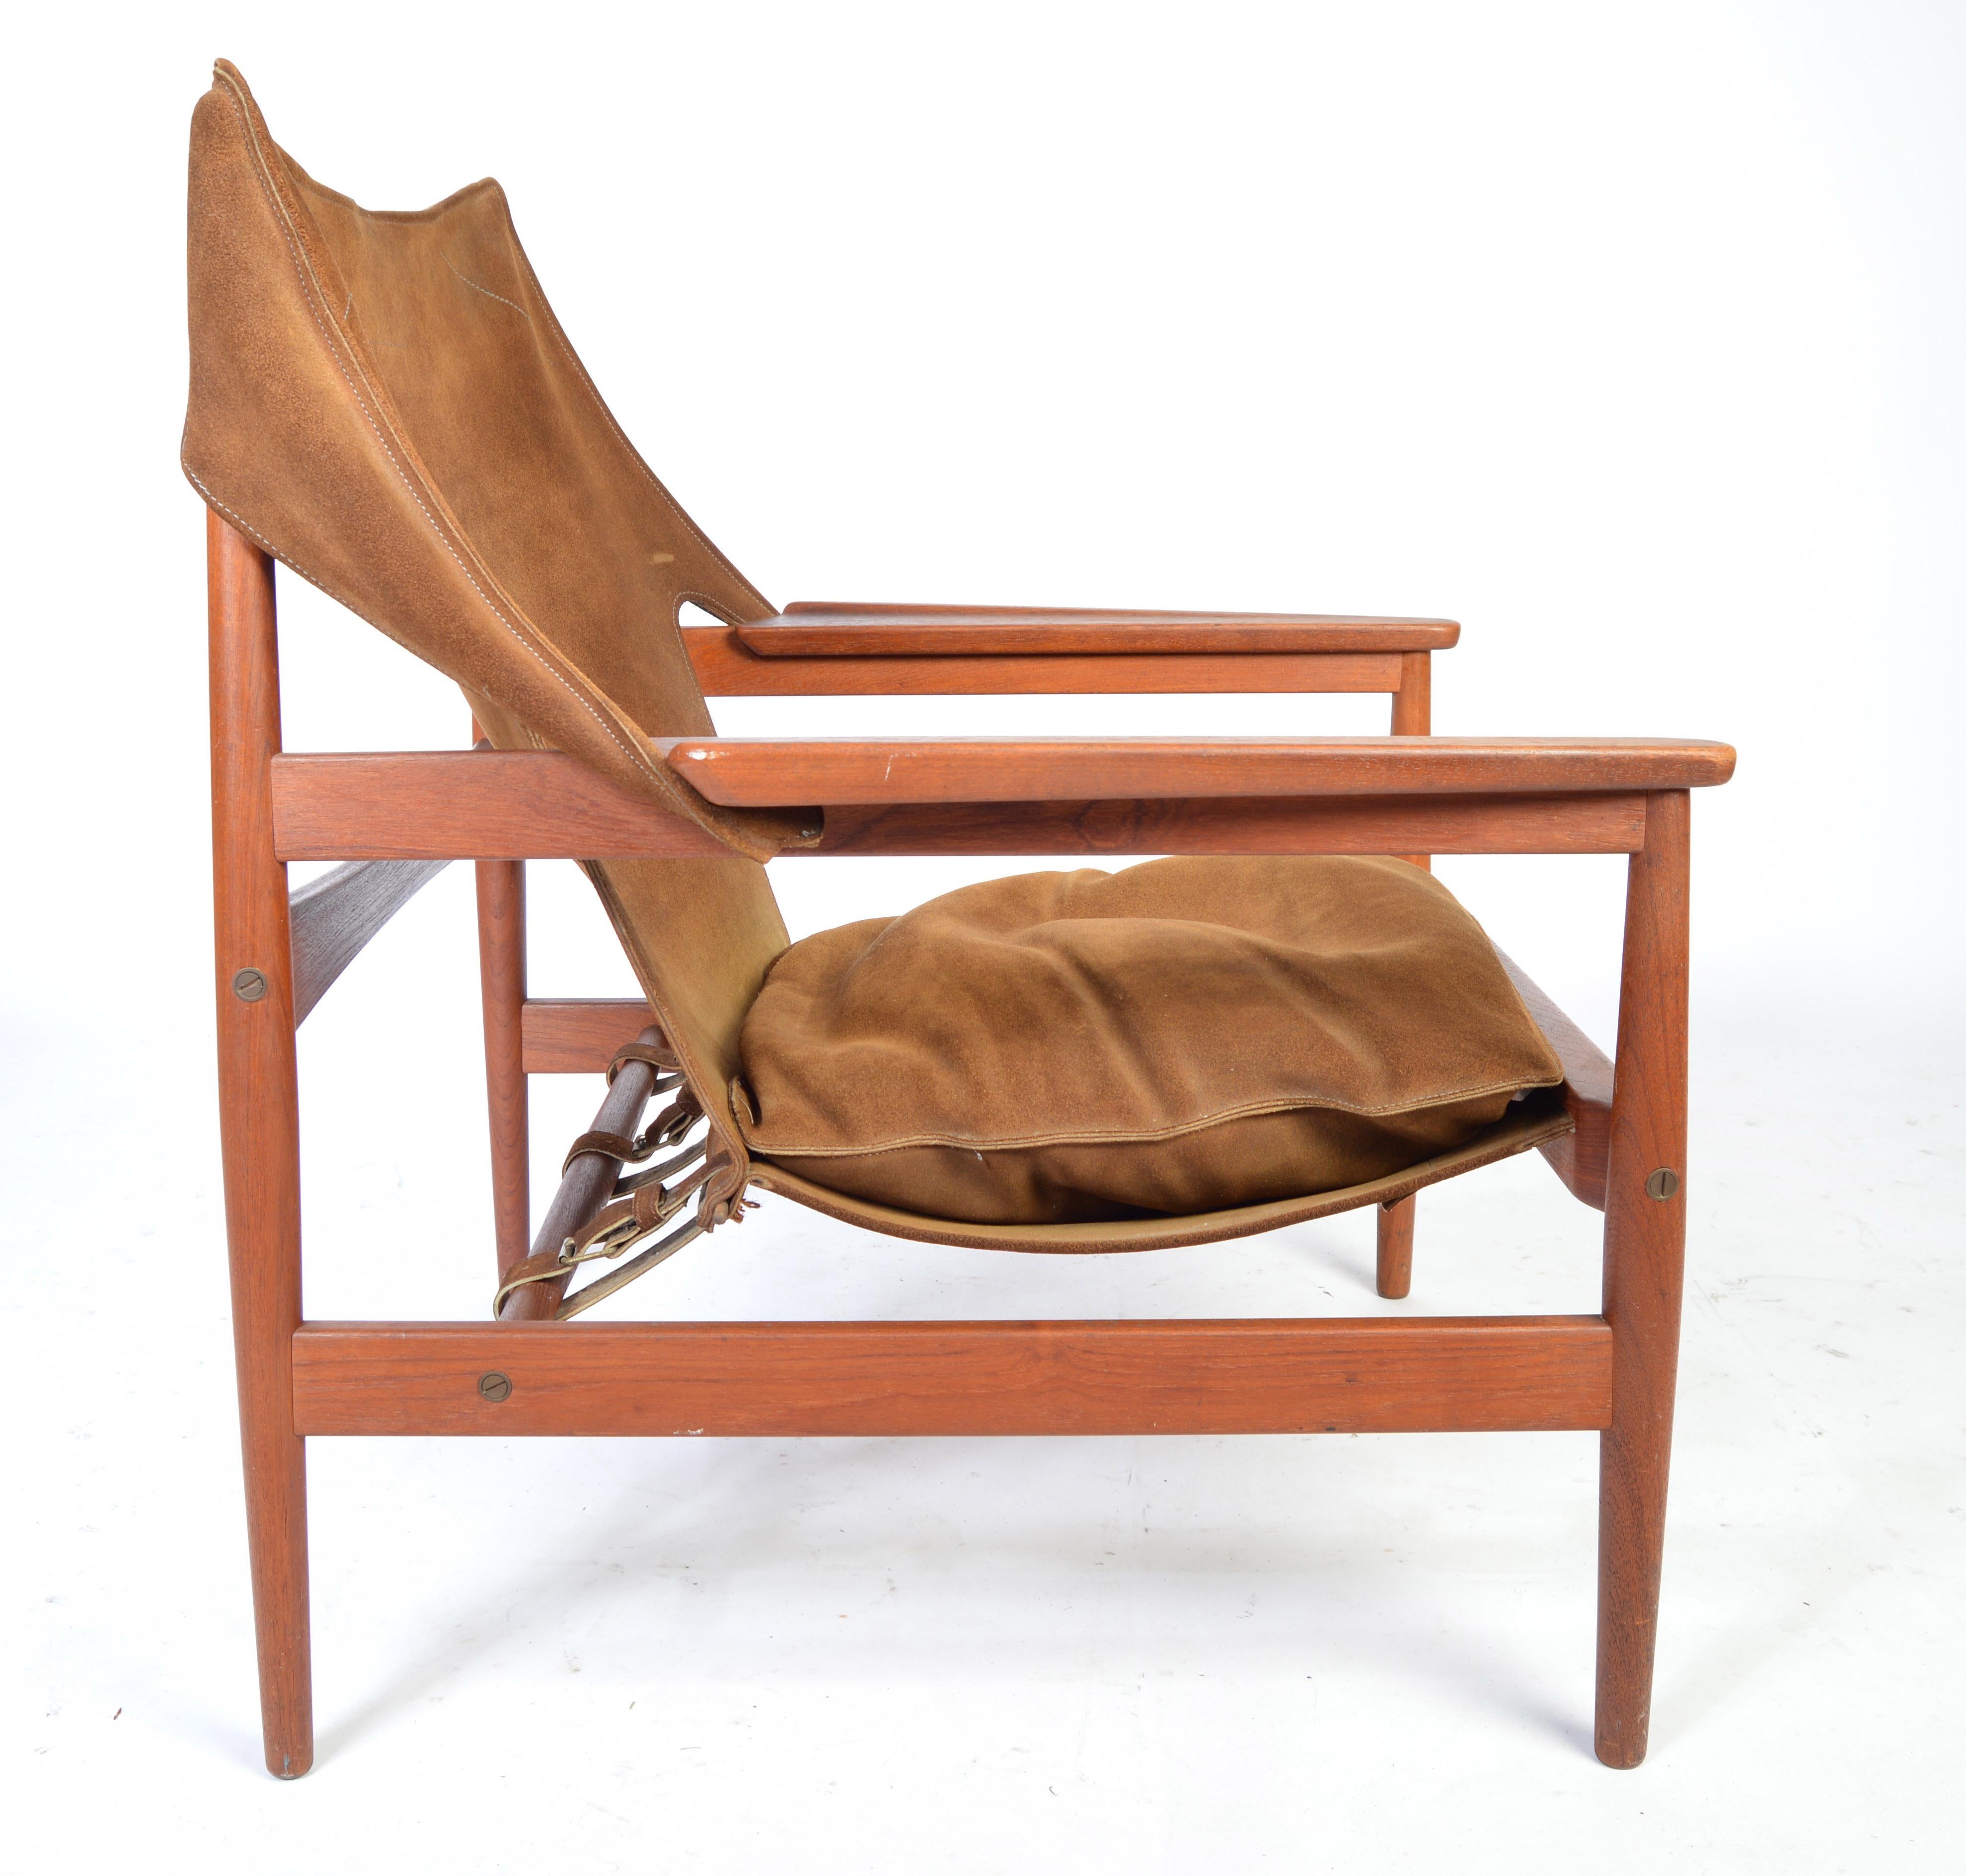 'Kinna' easy chair designed by Hans Olsen for Viska Mobler in Sweden having teak frame with suede seat and backrest.
Signed and in very good vintage condition.